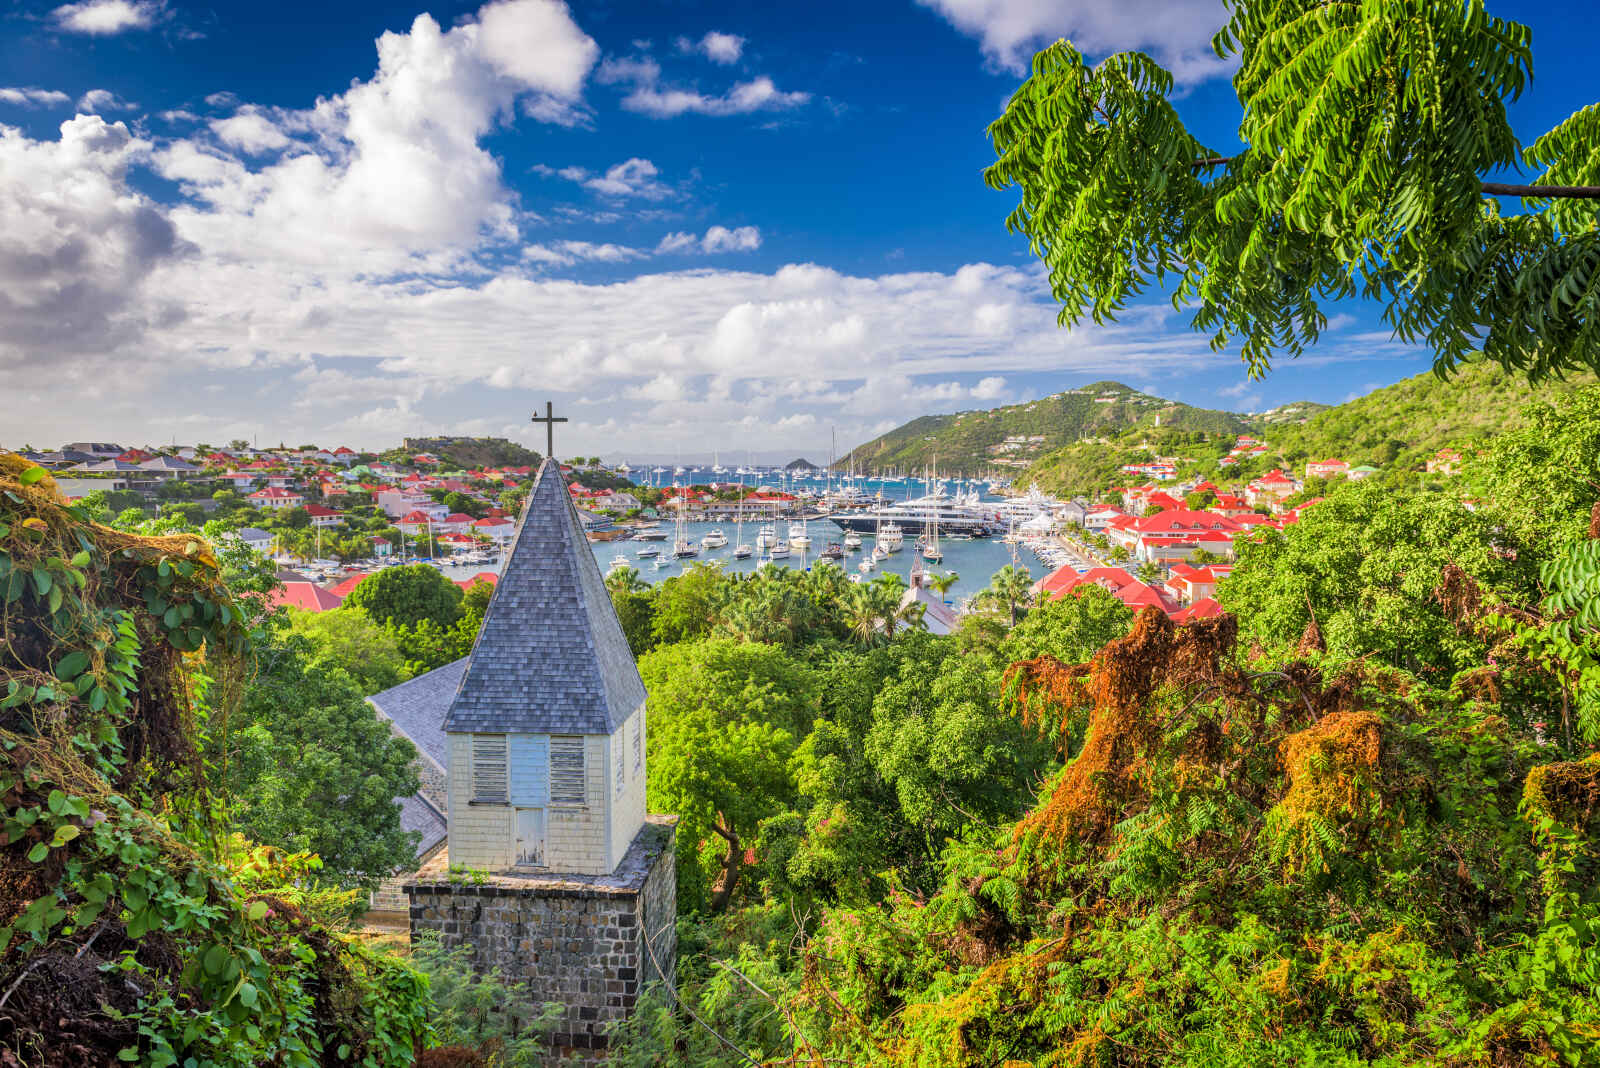 Gustavia, Saint-Barthélemy